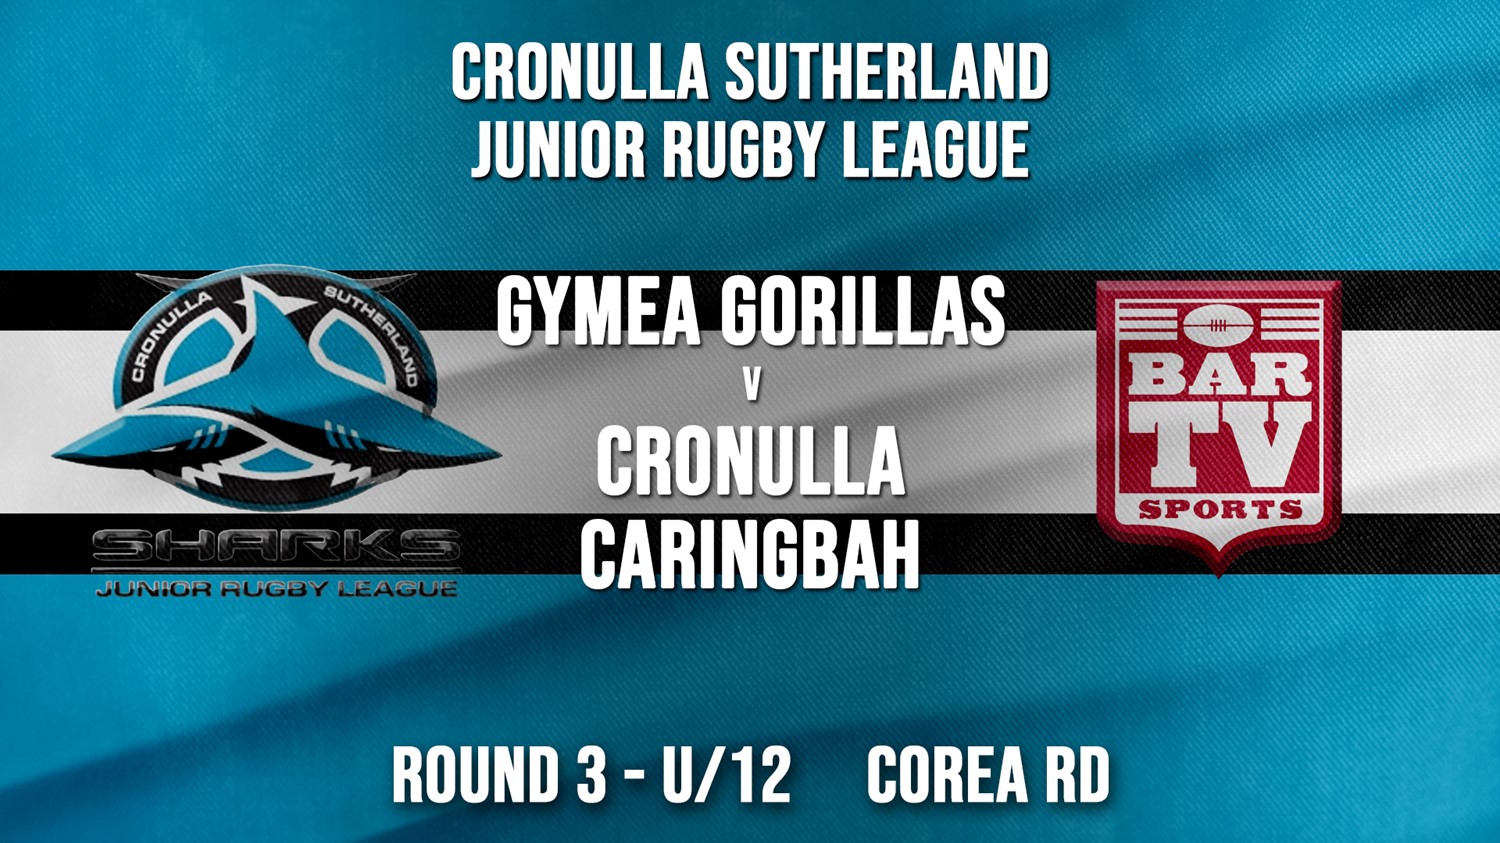 Cronulla JRL Round 3 - U12 - Gymea Gorillas v Cronulla Caringbah Minigame Slate Image